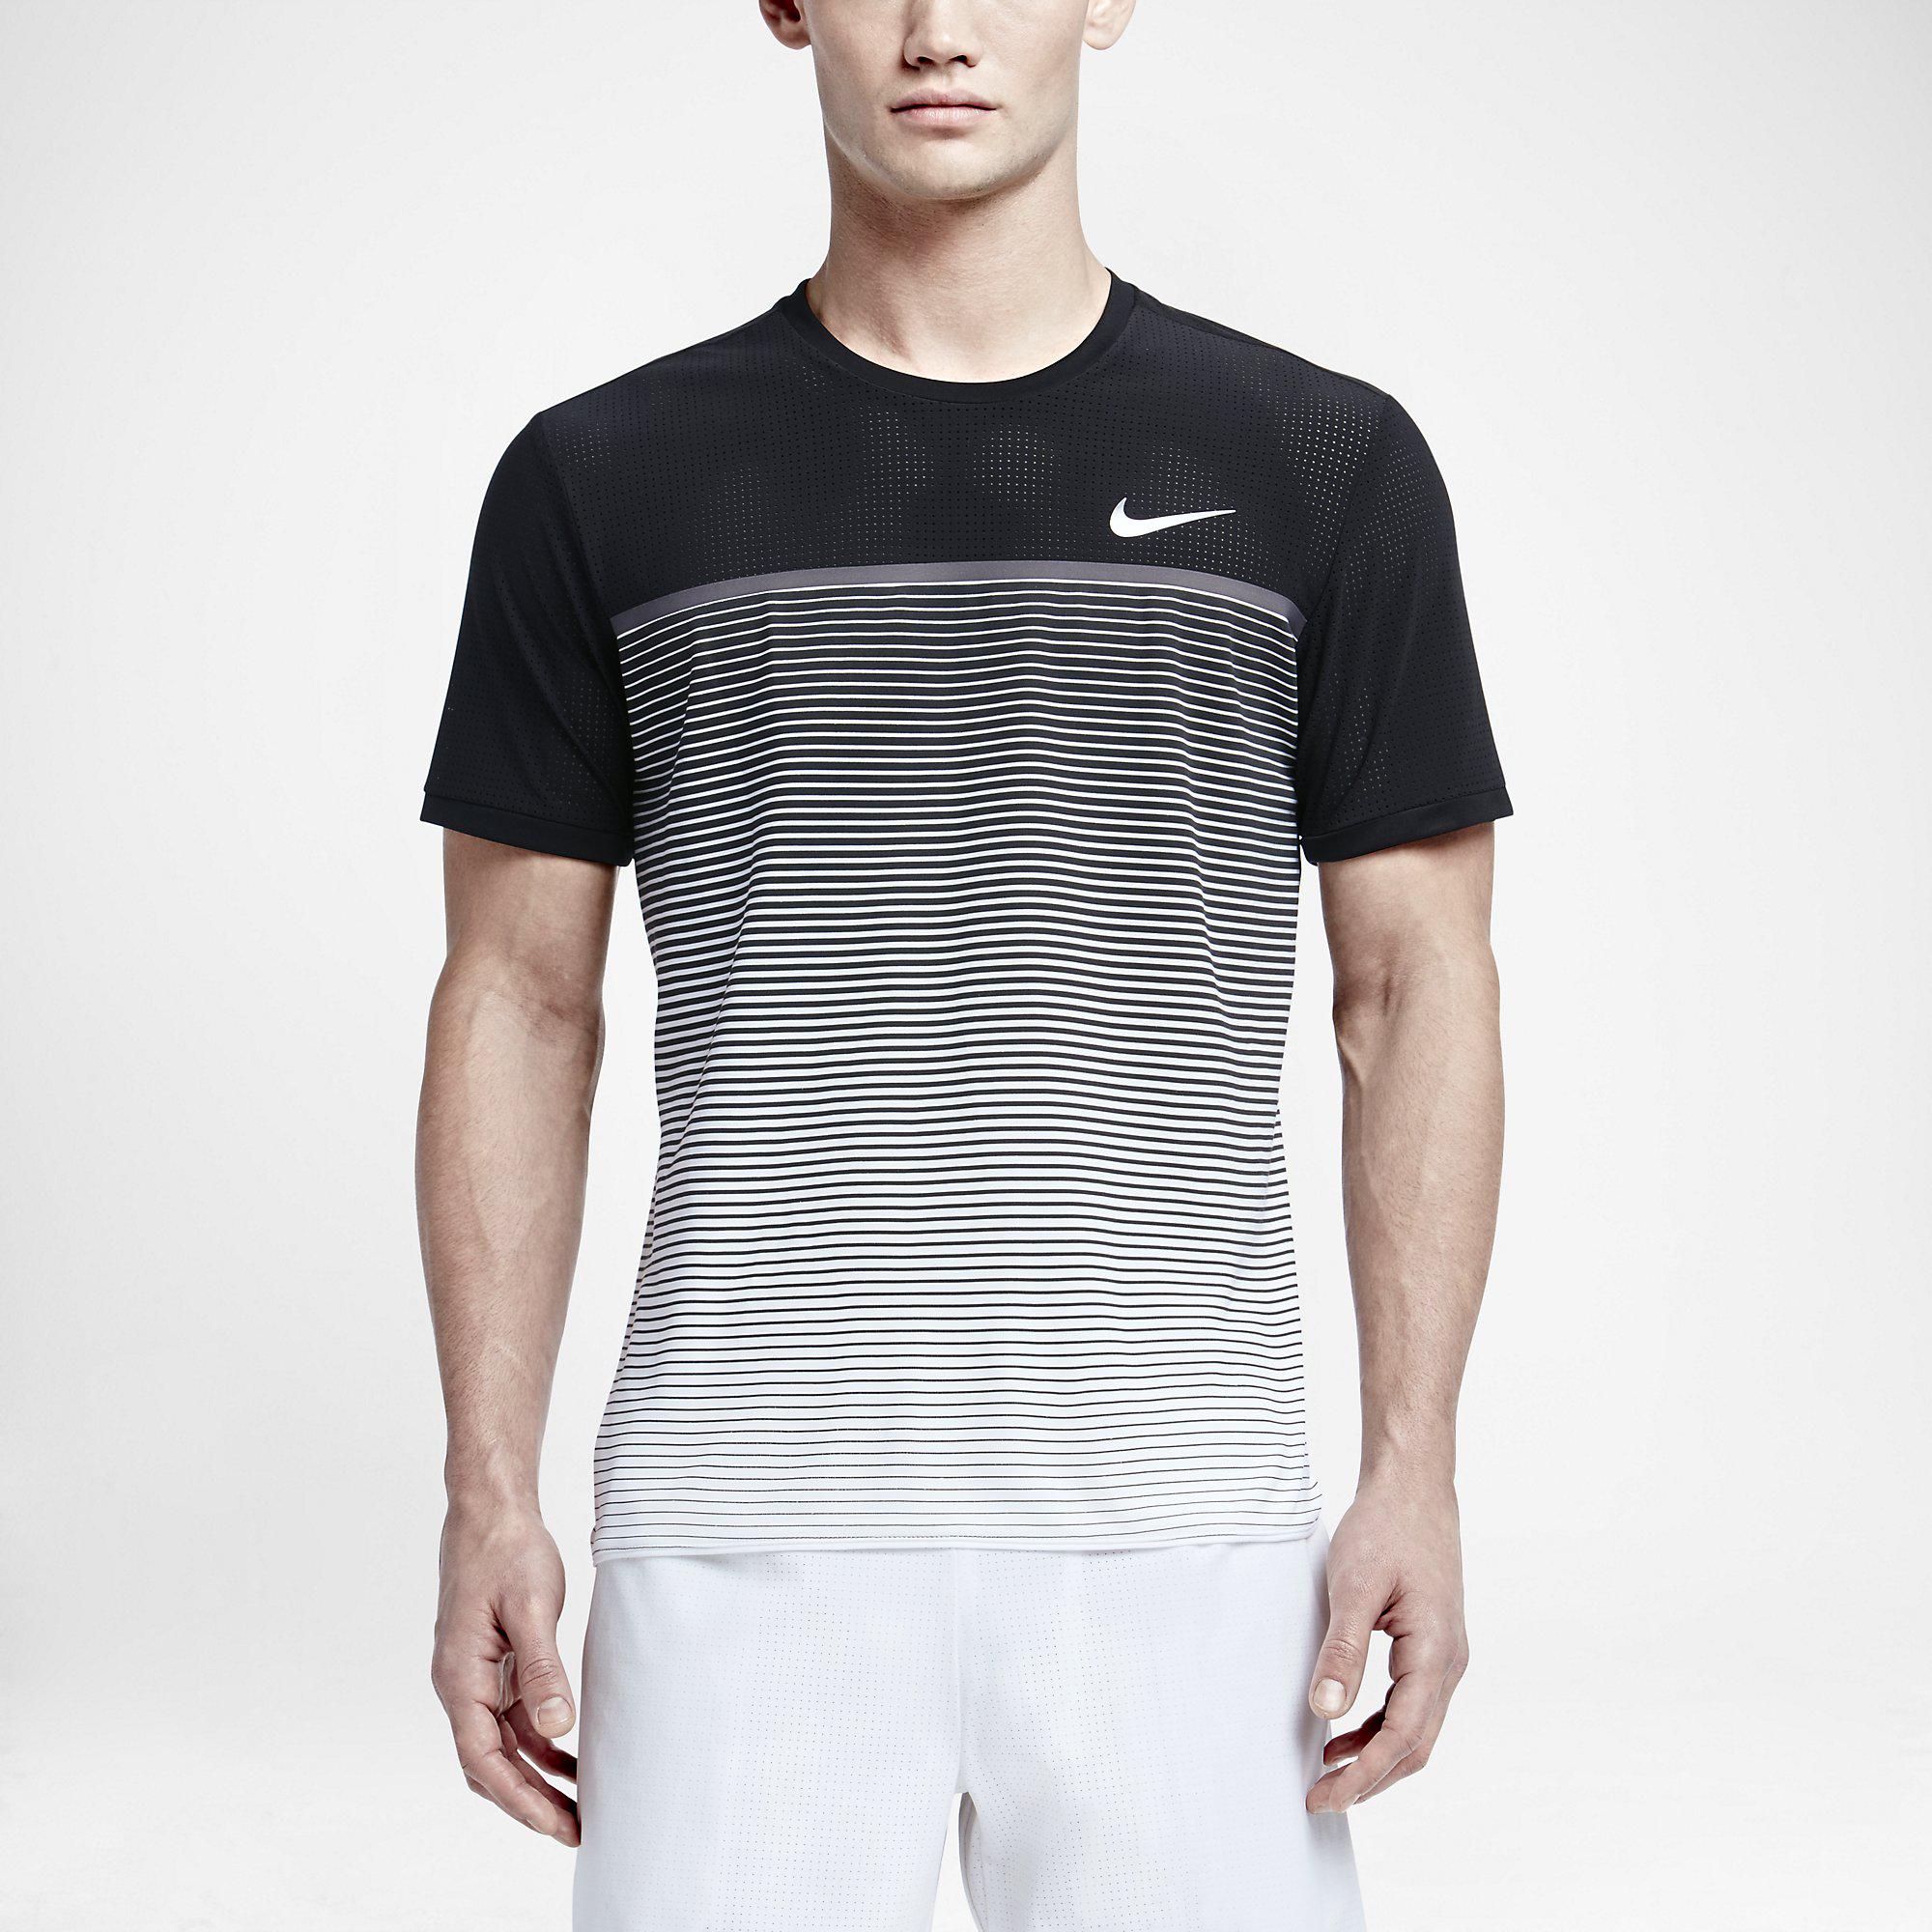 Nike Mens Challenger Premier Crew - Black/White - Tennisnuts.com